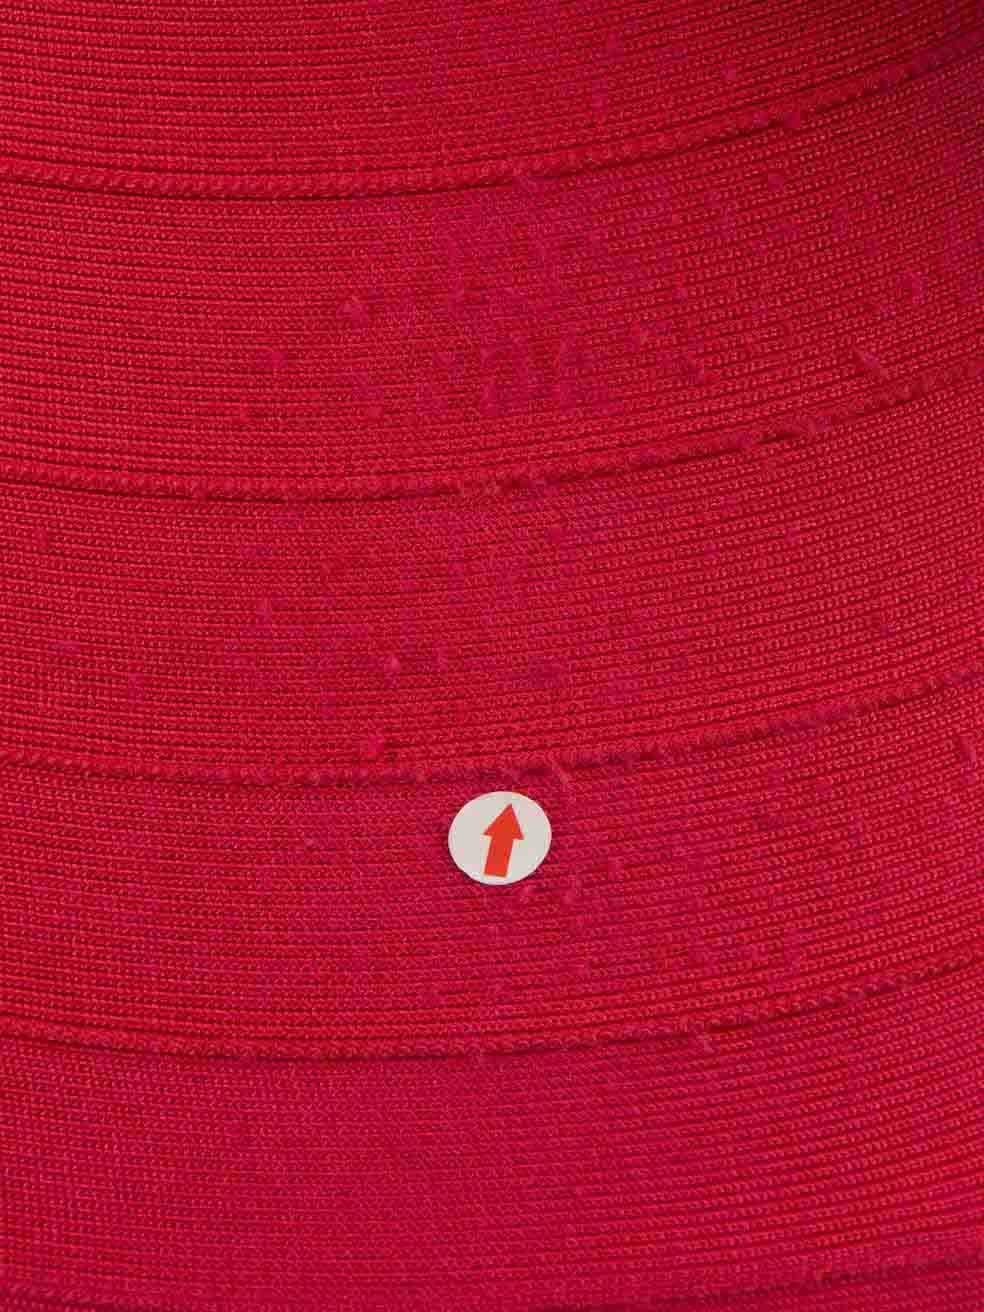 Women's Herve Leger Pink Cap Sleeve Bandage Midi Dress Size XS For Sale